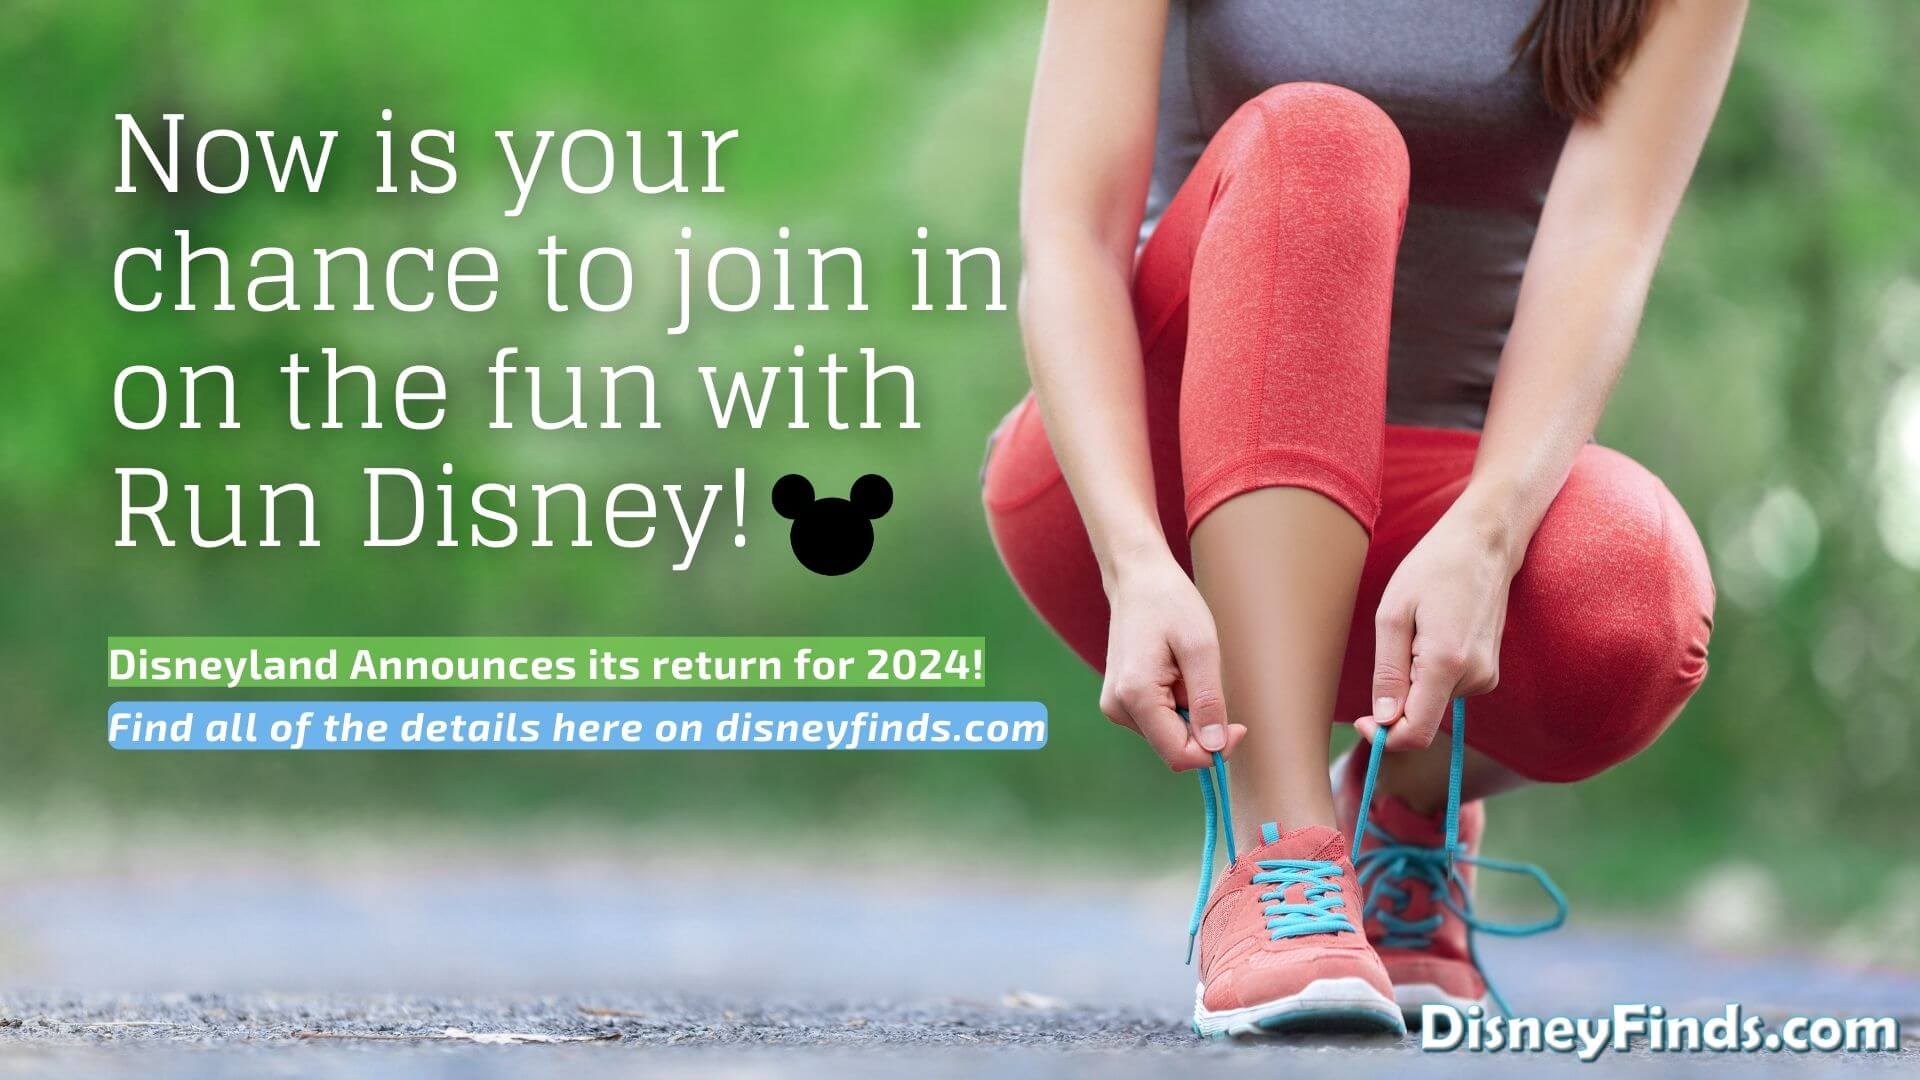 Disneyland Announces the Return of Run Disney for 2024! Disney Finds